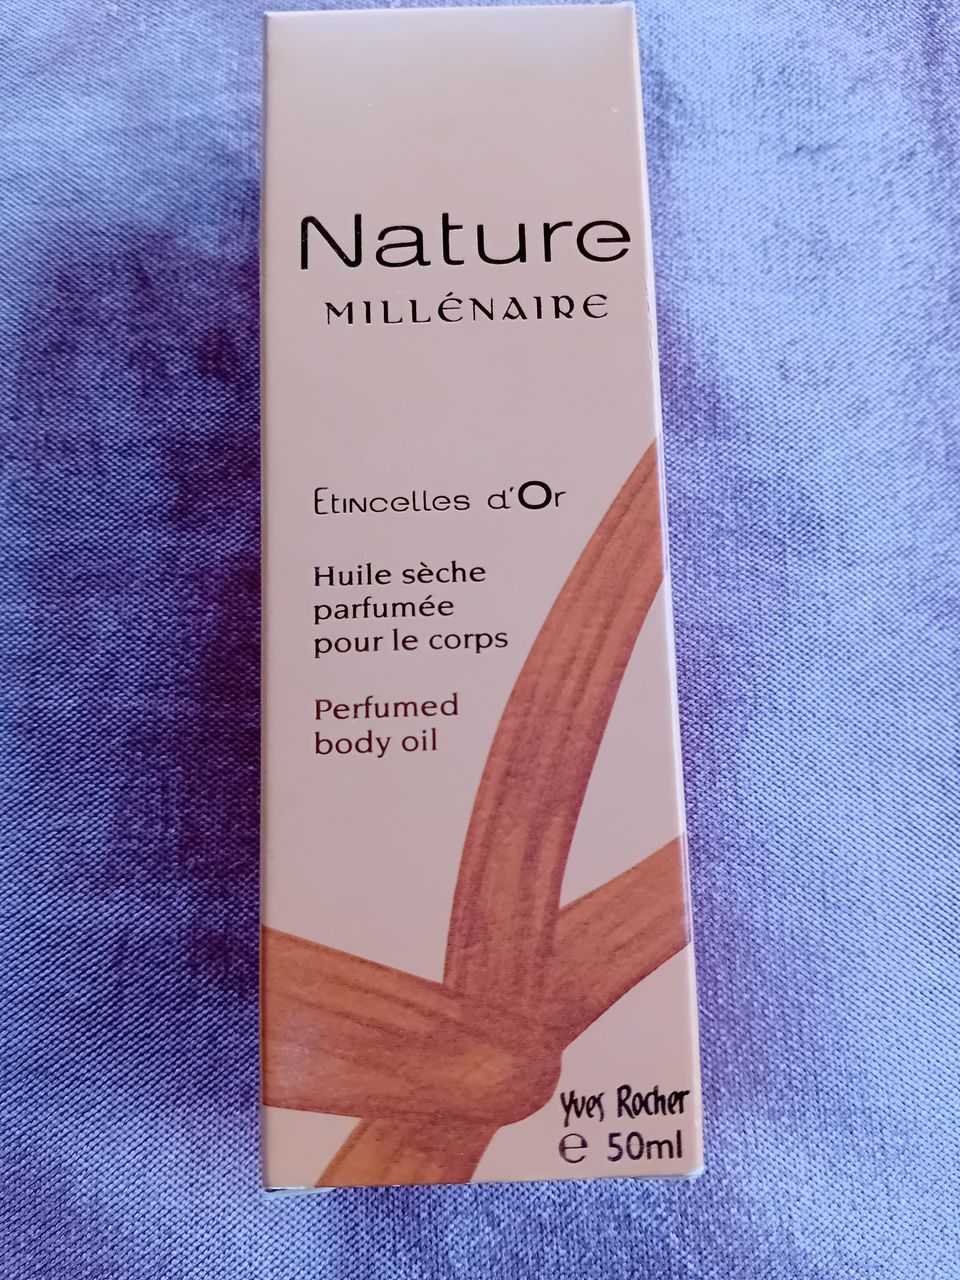 Yves Rocher Nature Millenaire perfumed body oil